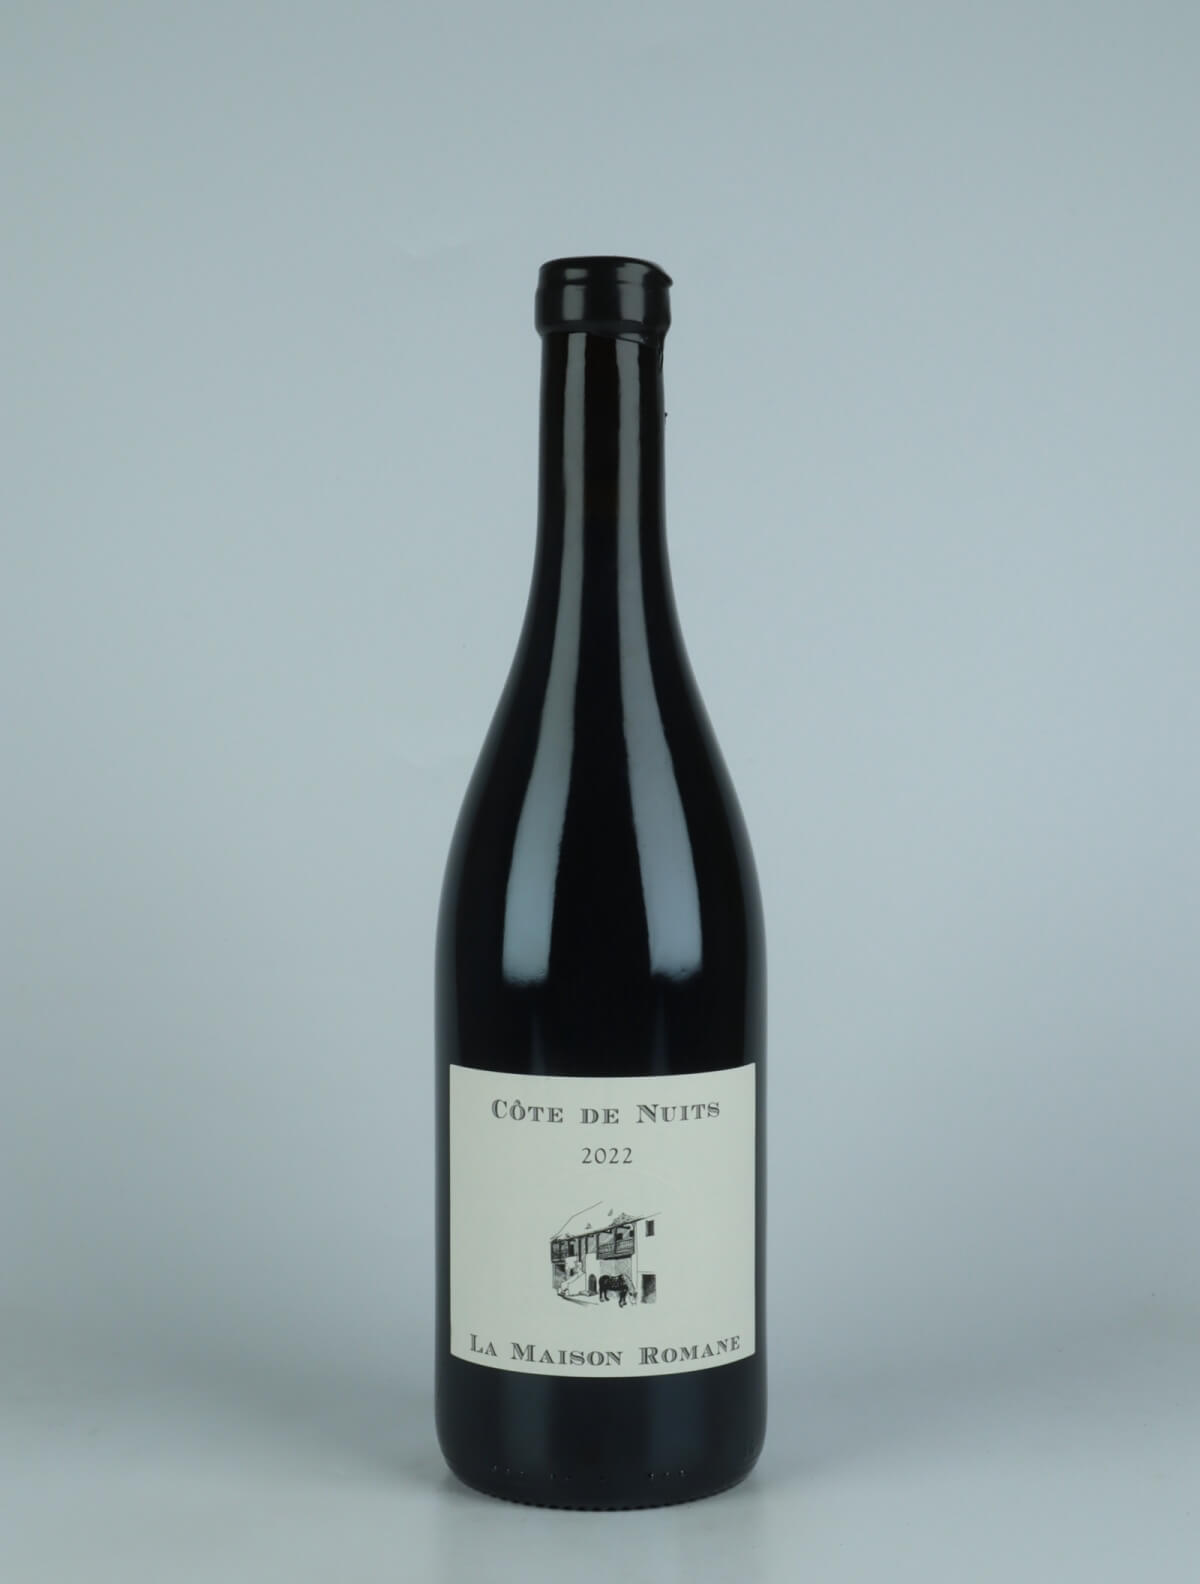 A bottle 2022 Côtes de Nuits Red wine from La Maison Romane, Burgundy in France